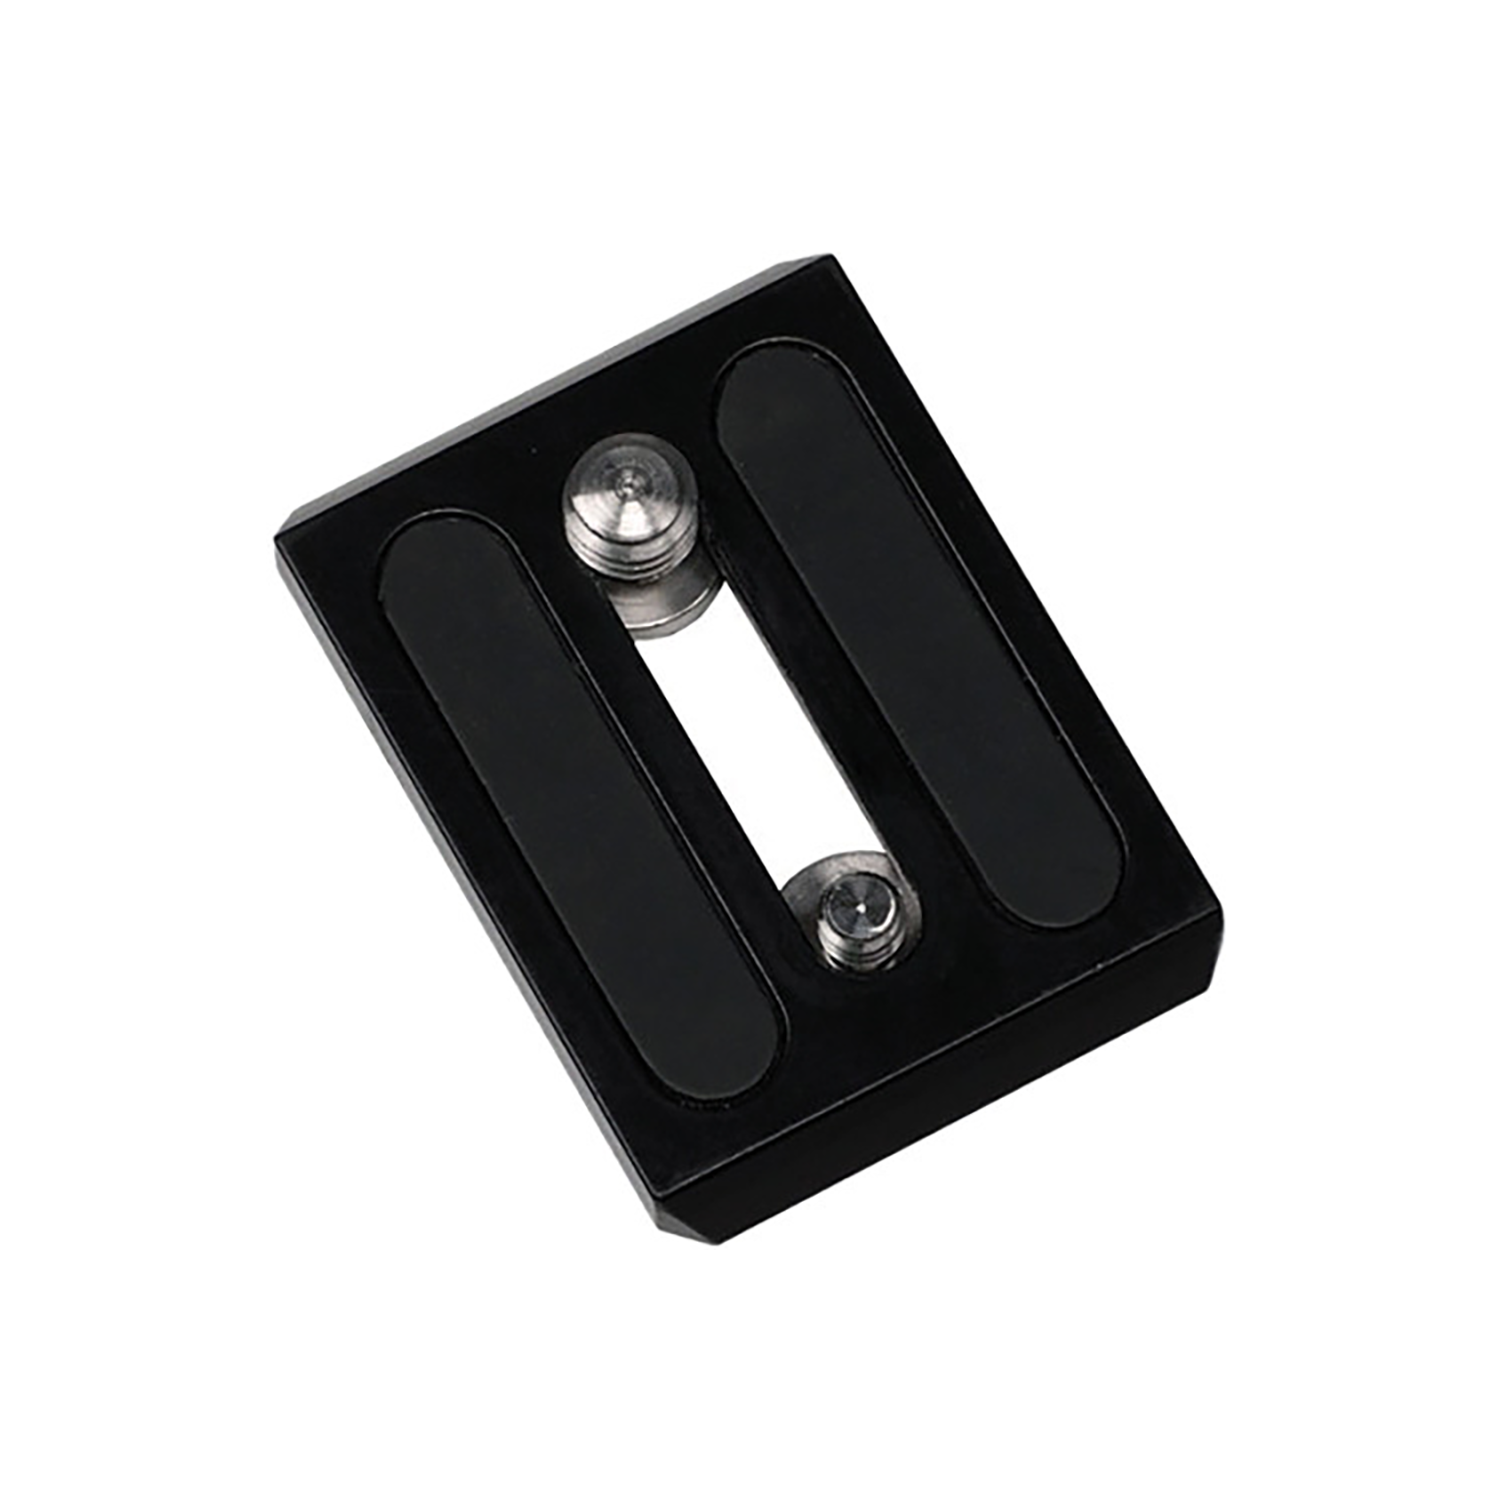 MILLER Camera Plate Mini EURO (Quick Release) to suit Compass 20 Fluid Head w/036 & 037 screws